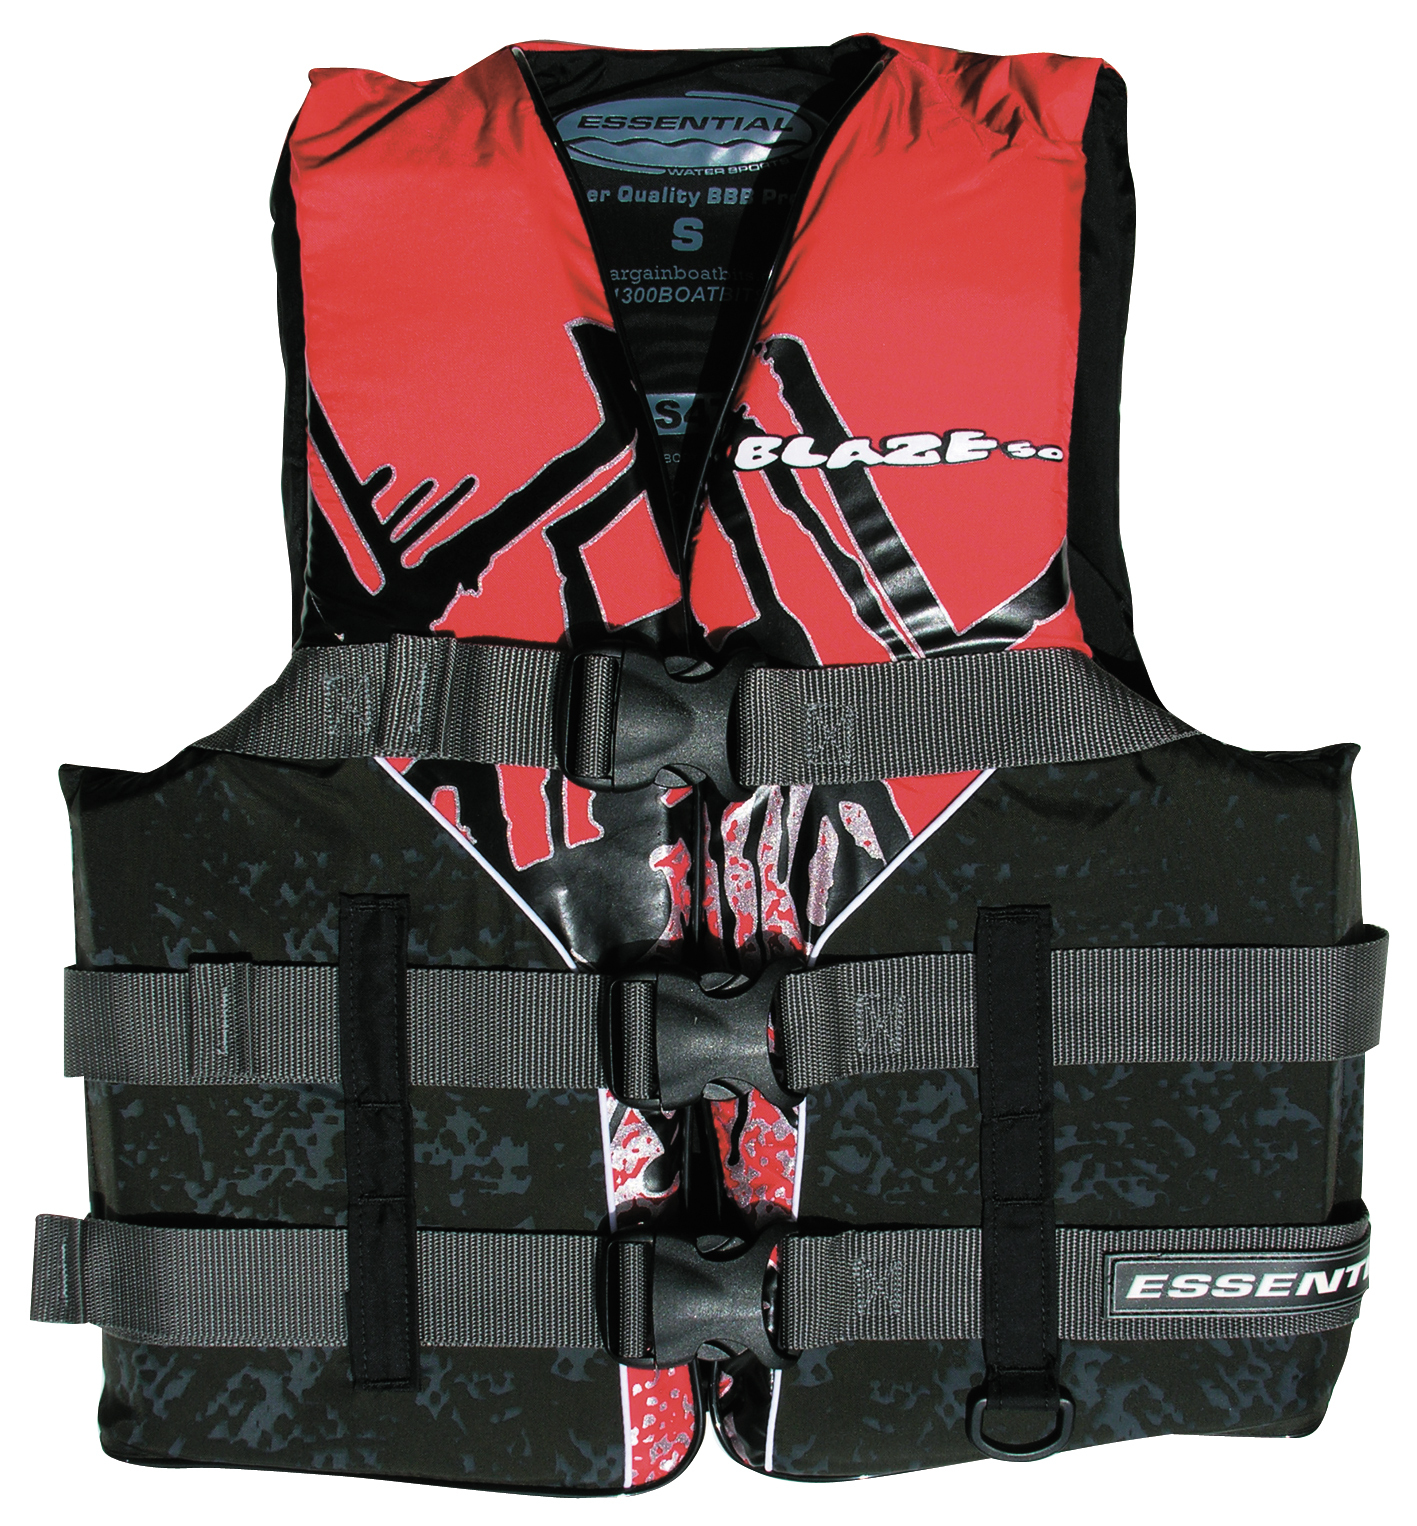 Essential Blaze L50 Adult Large Ski Vest Red Essential